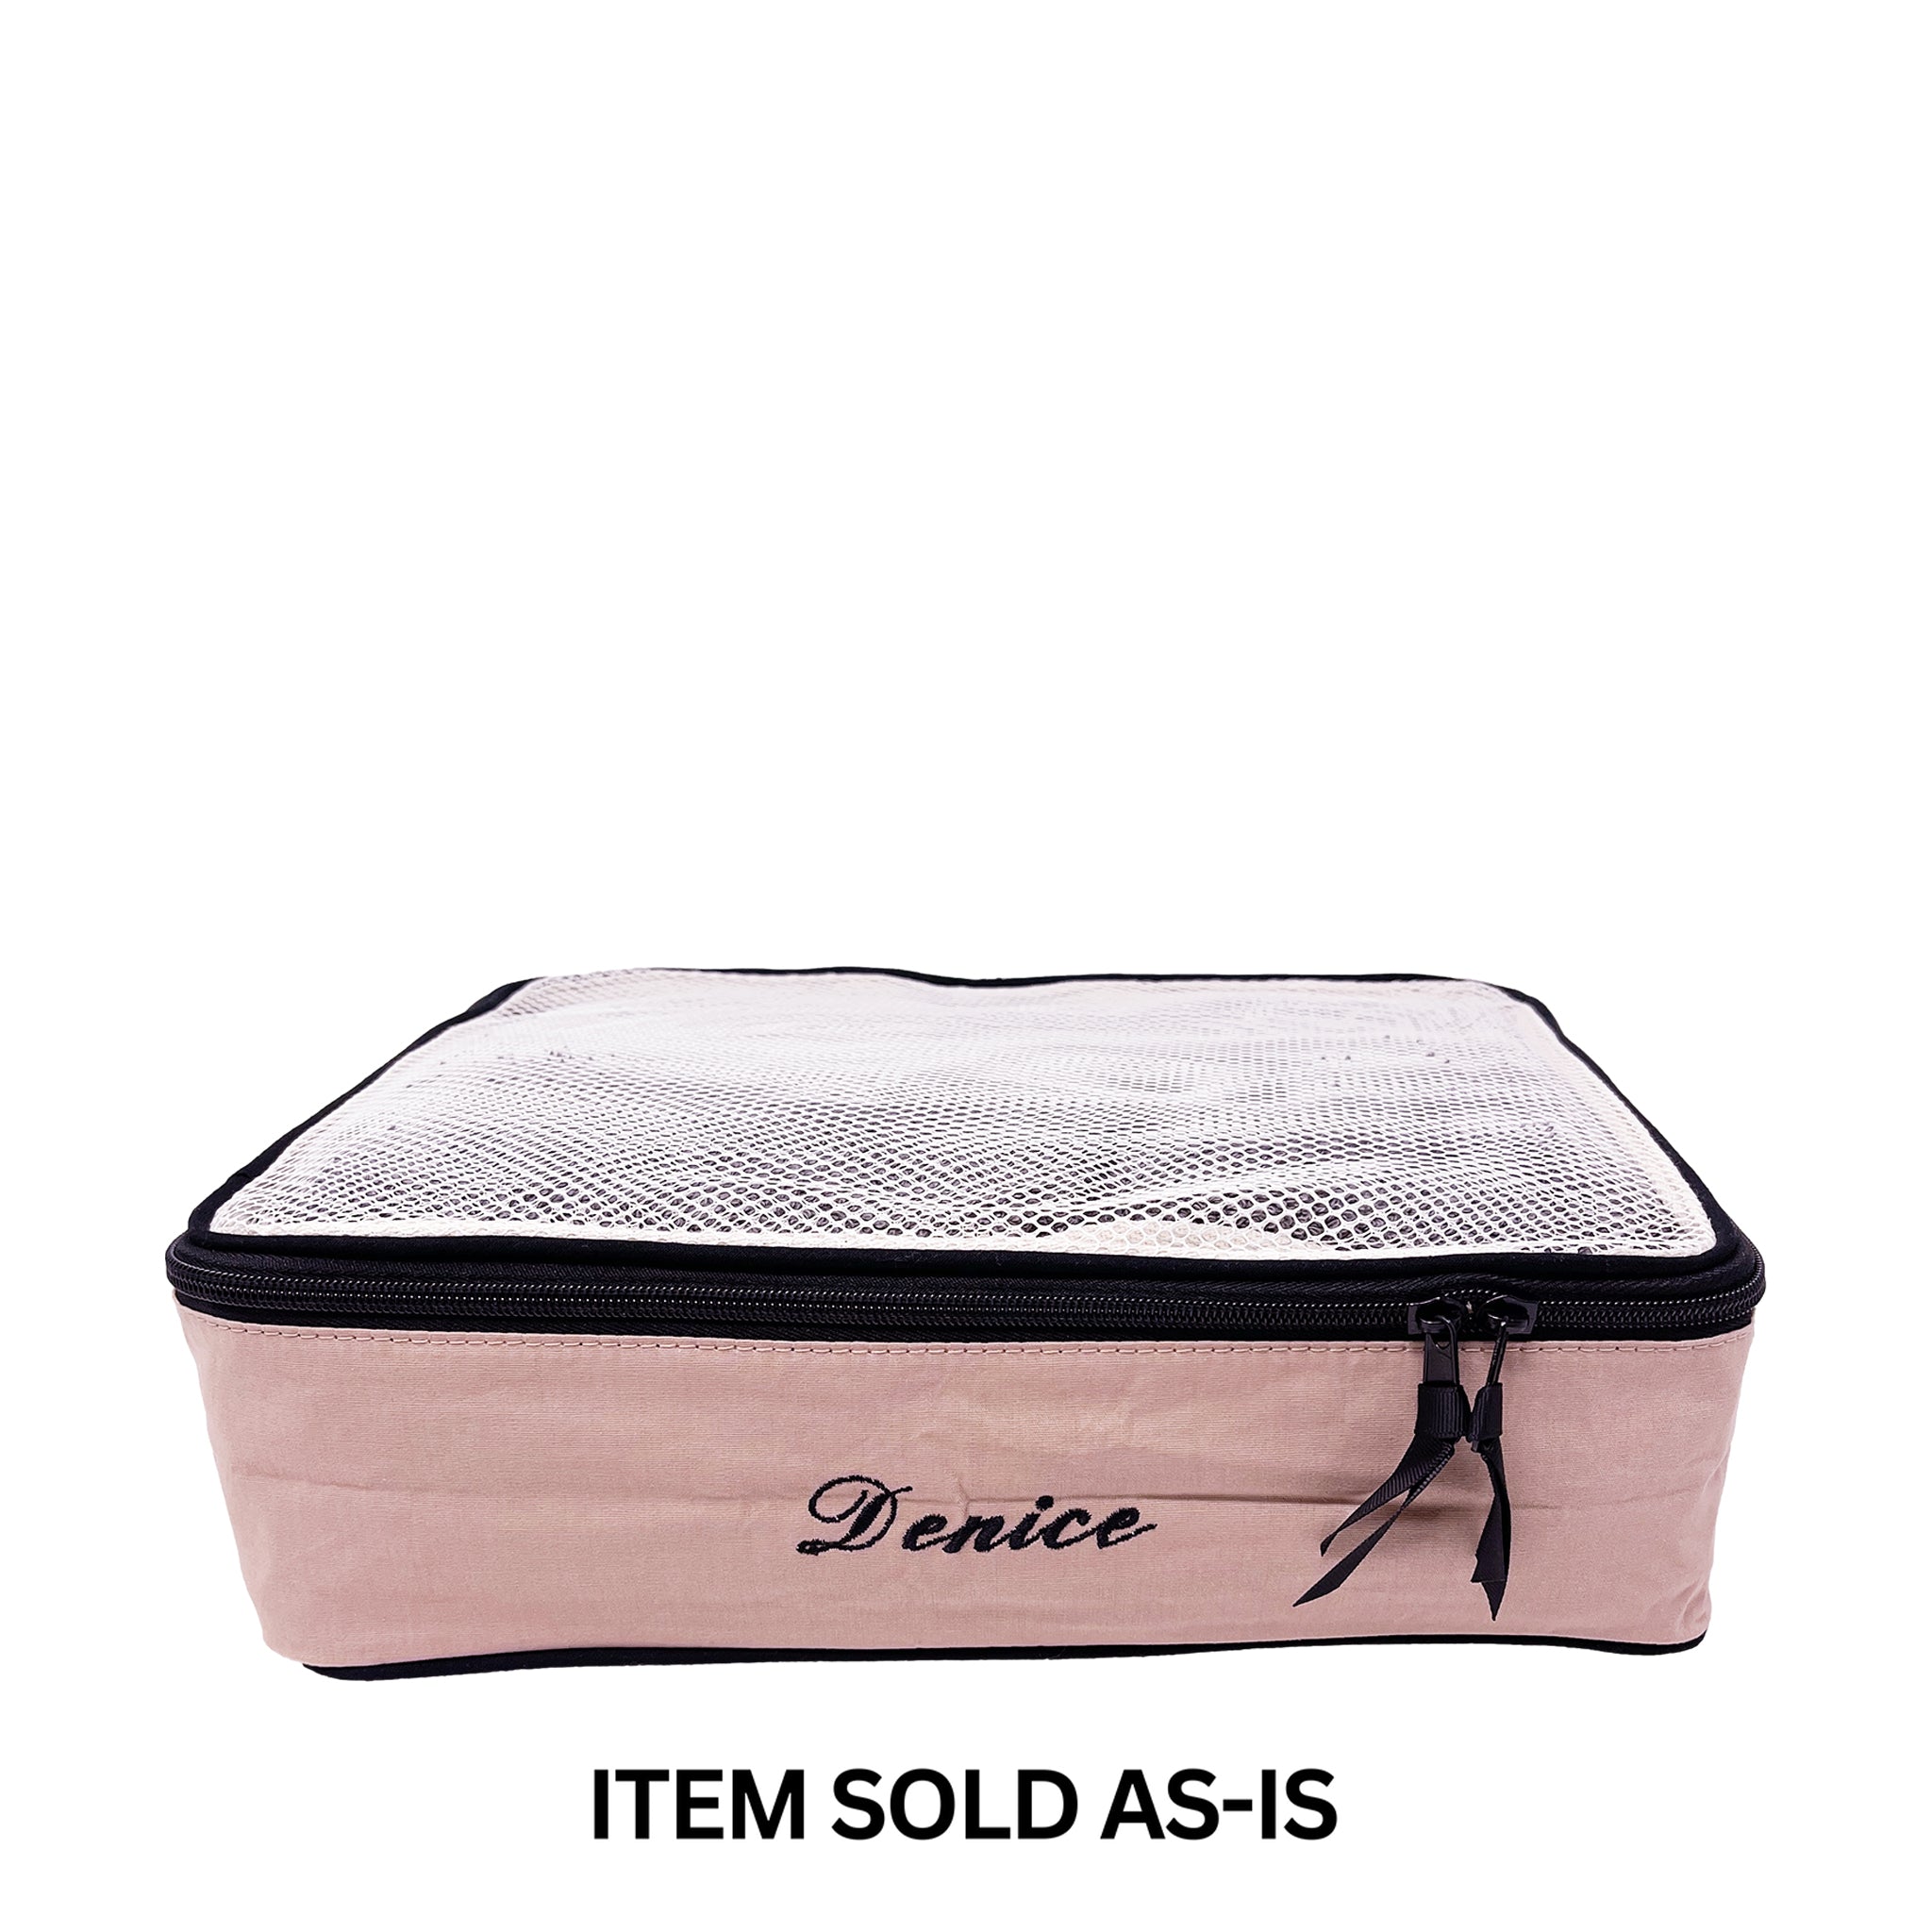 SALES BIN - Cotton Packing Cubes, 3-pack Pink/Blush | Bag-all